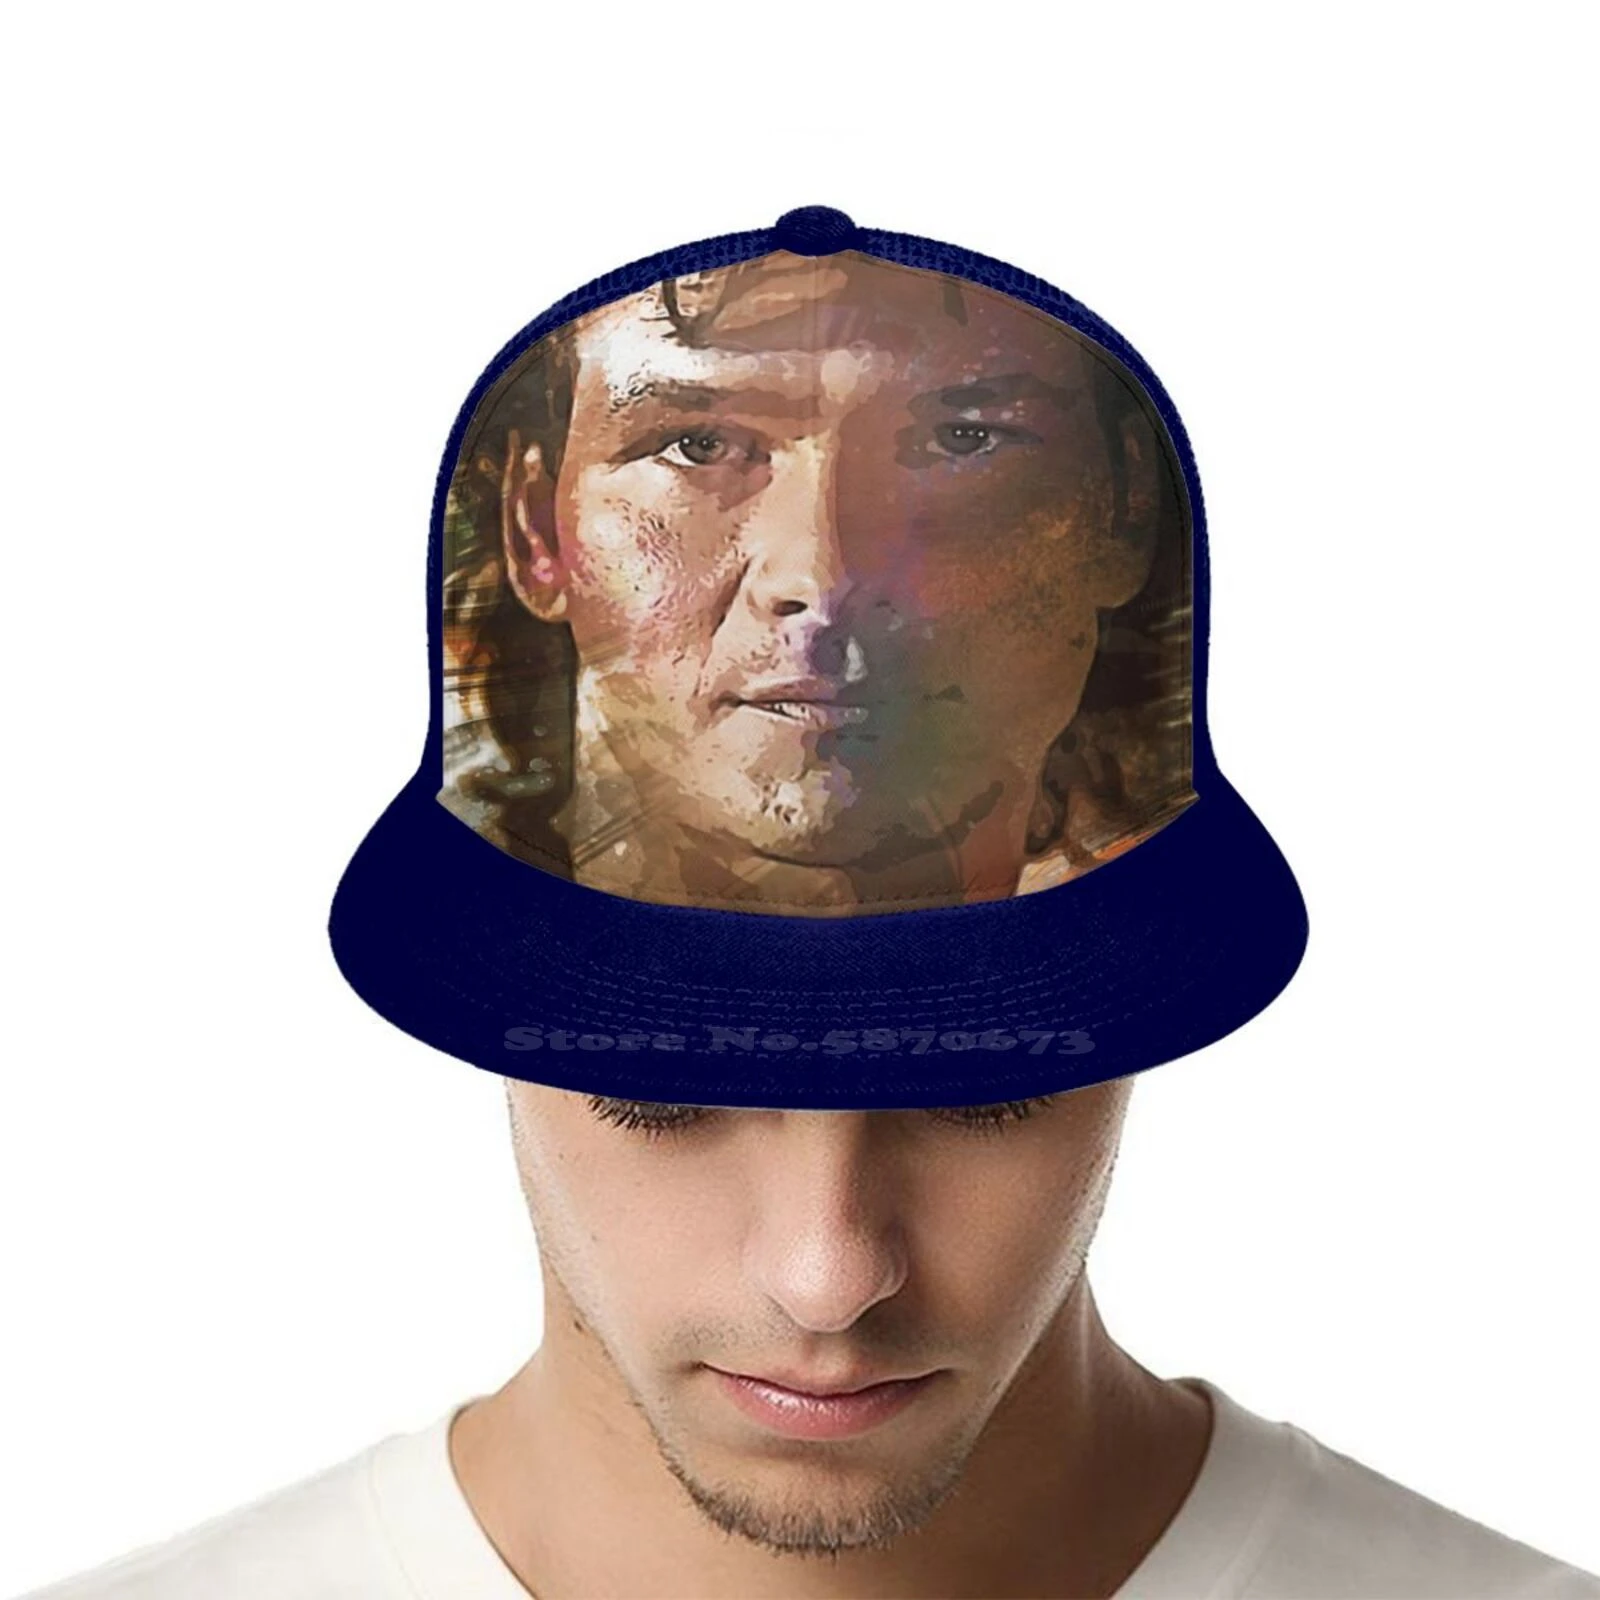 Patrick Swayze Digital Artwork Hip Hop Fashion Hat Cap Movies Video Movie Film Videos Actor Actress Cinema Dvd|Men's Baseball Caps| AliExpress